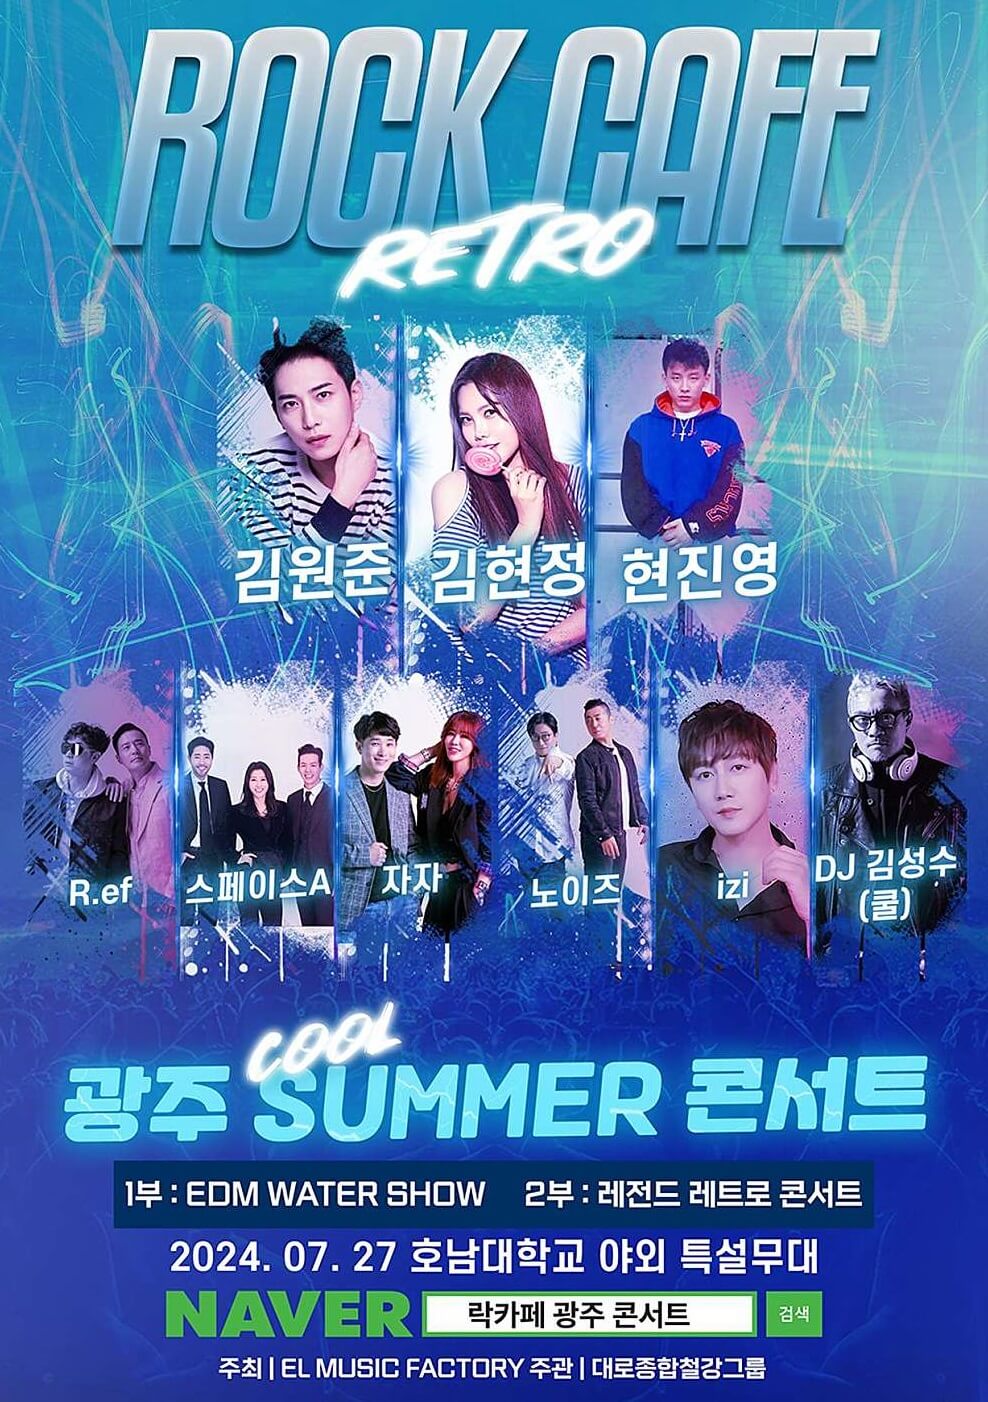 1st ROCK CAFE RETRO 광주 SUMMER 콘서트